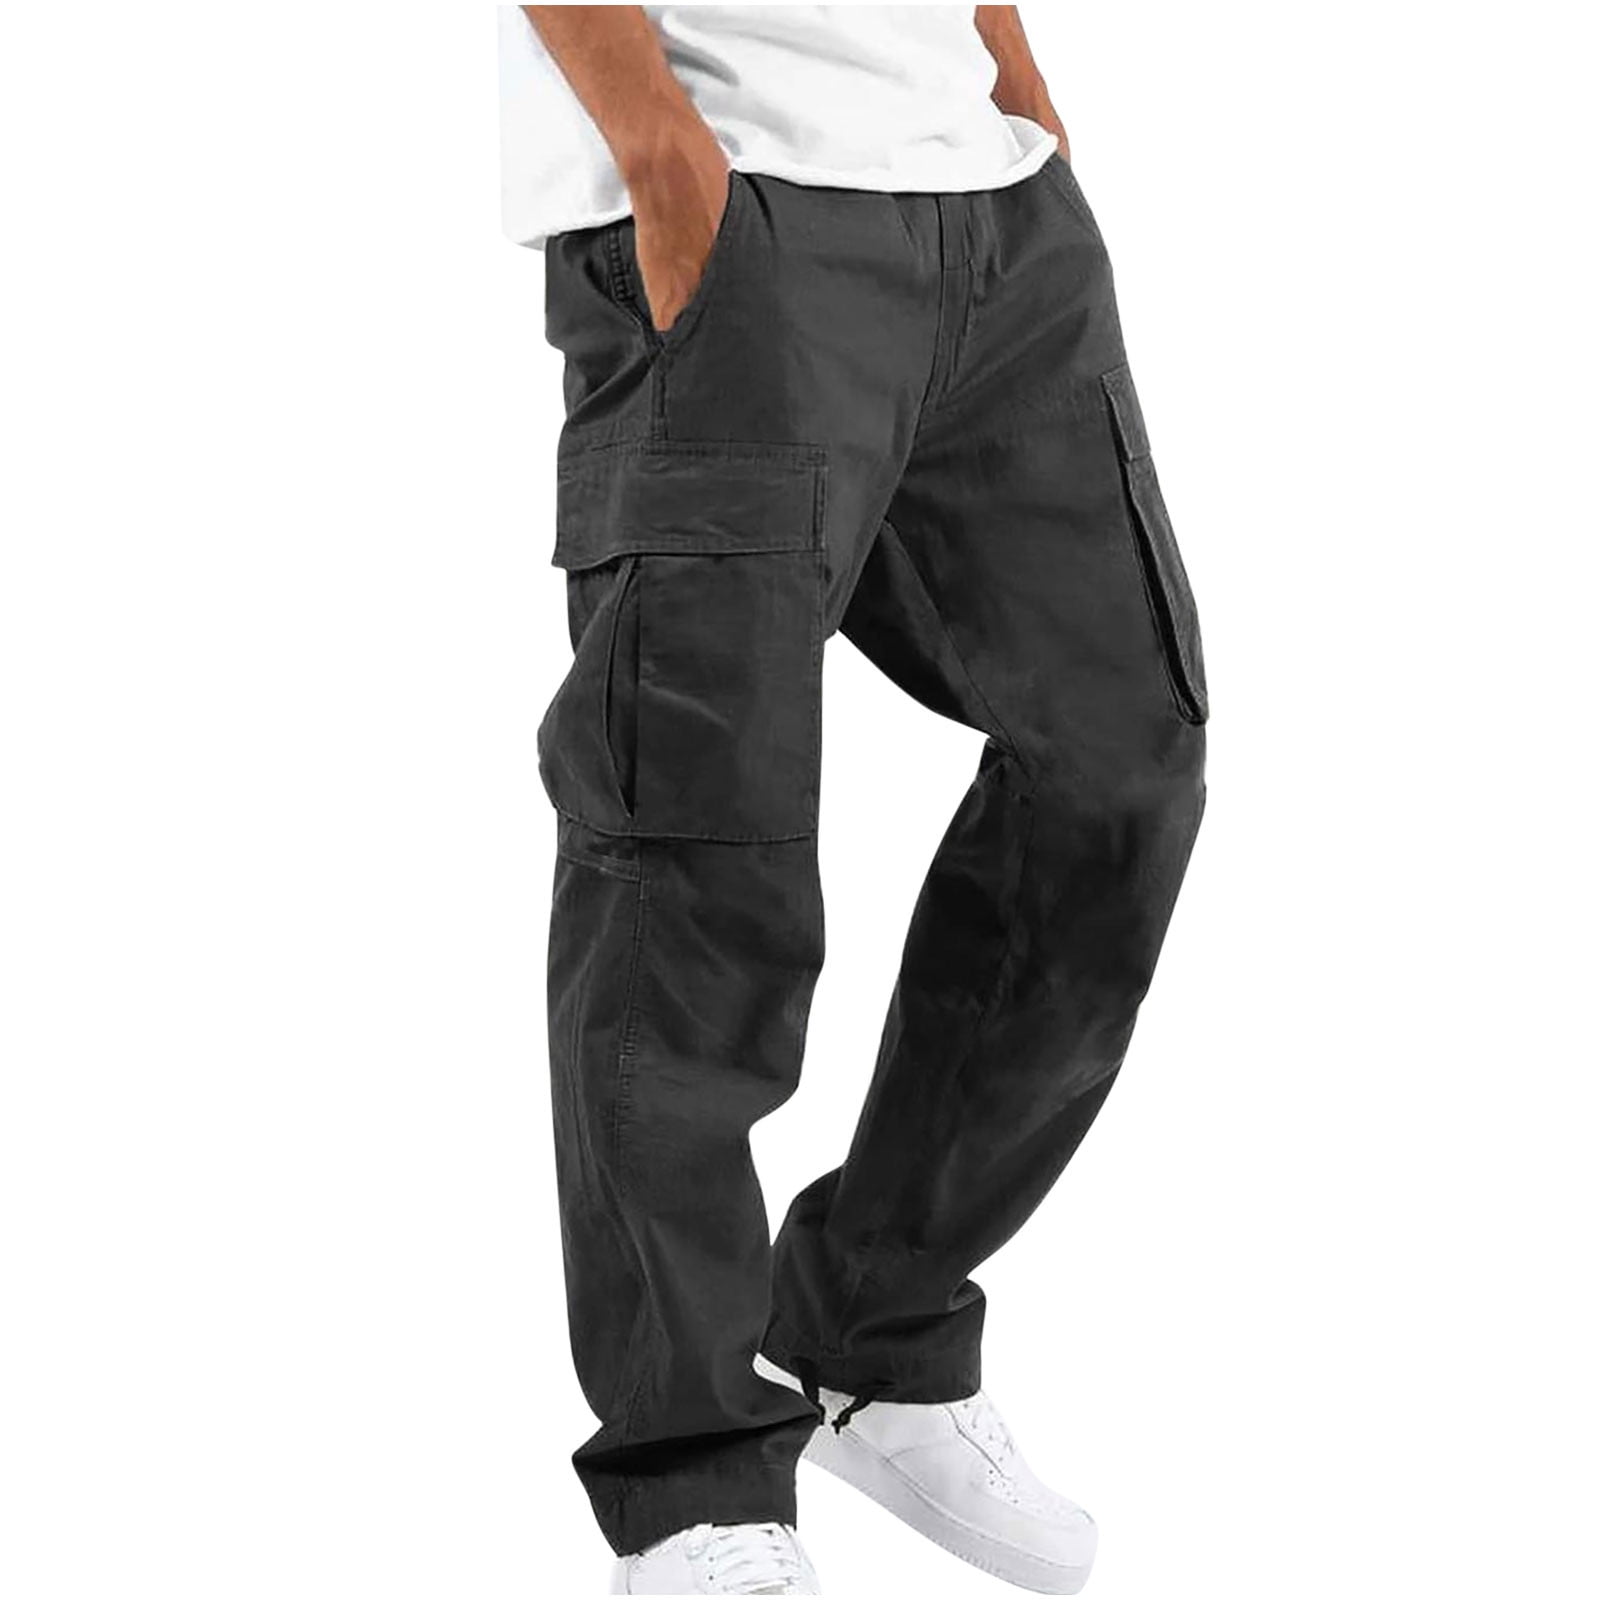 Soft Surroundings 100% Cotton Black Casual Pants Size XL (Tall